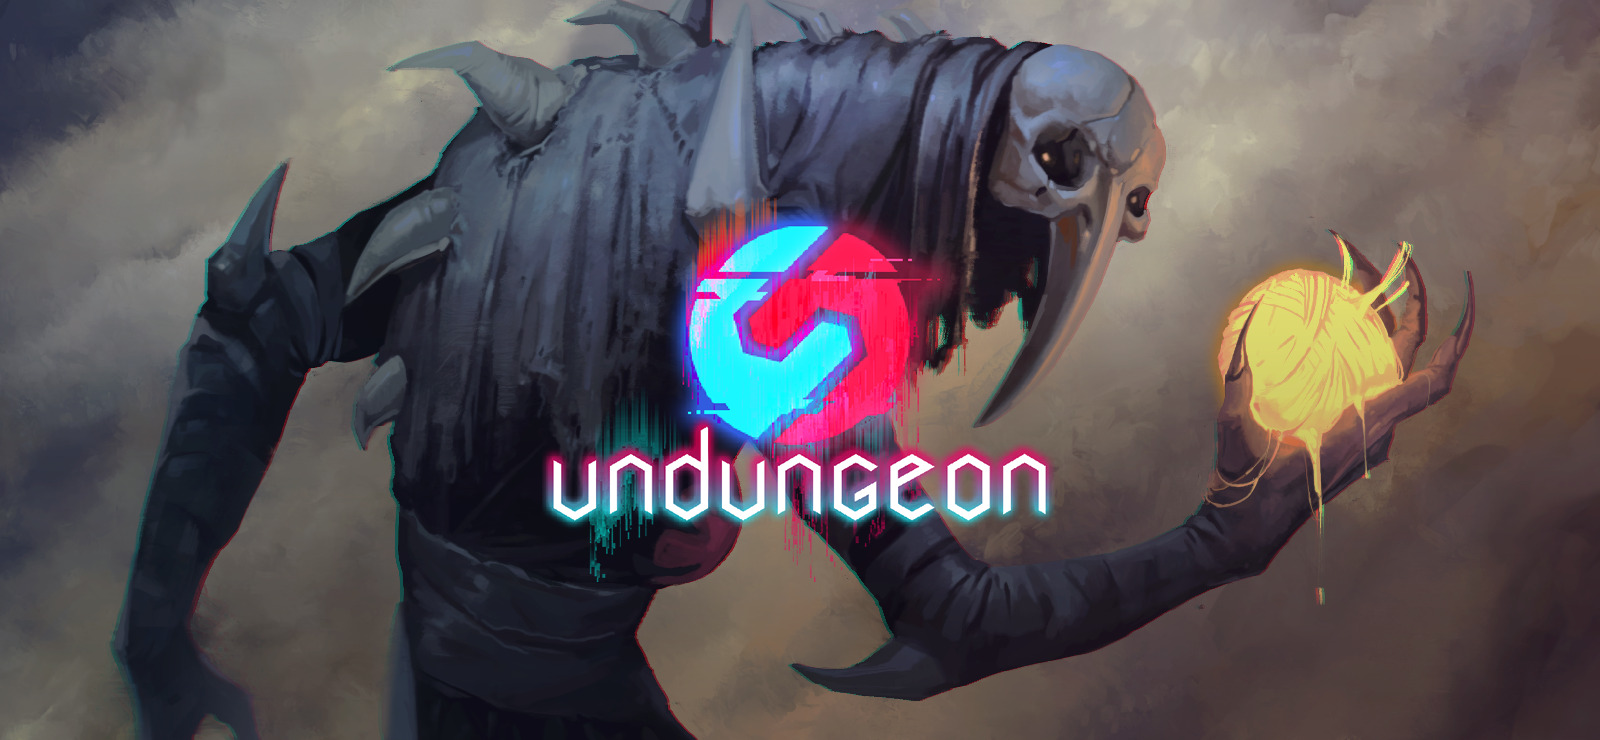 undungeon-pc-cover